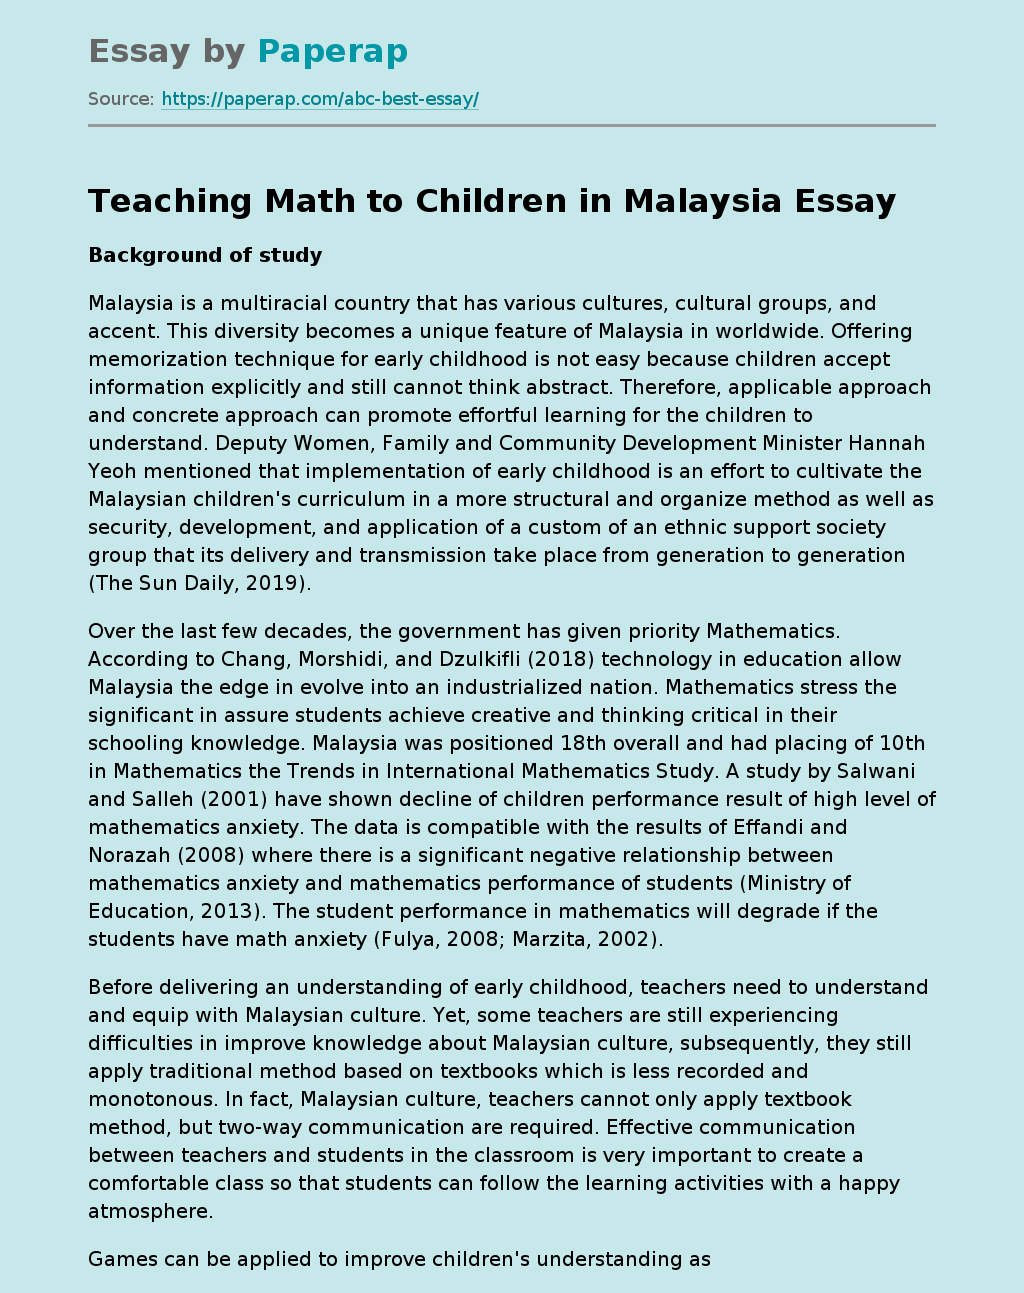 Teaching Math to Children in Malaysia